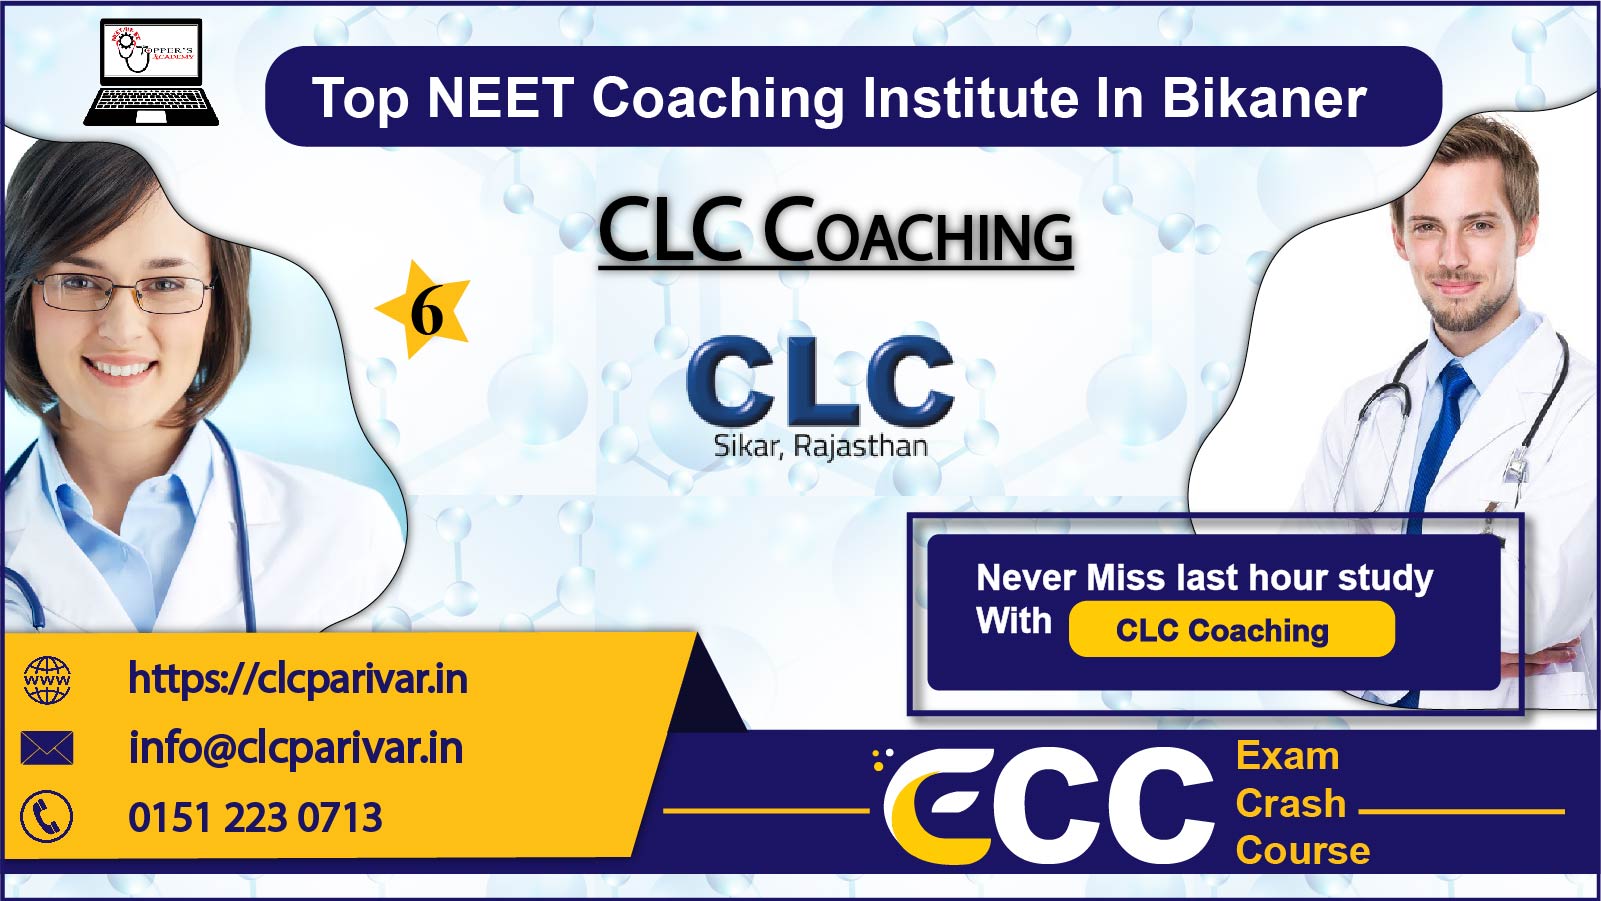 CLC NEET Coaching Classes In Bikaner